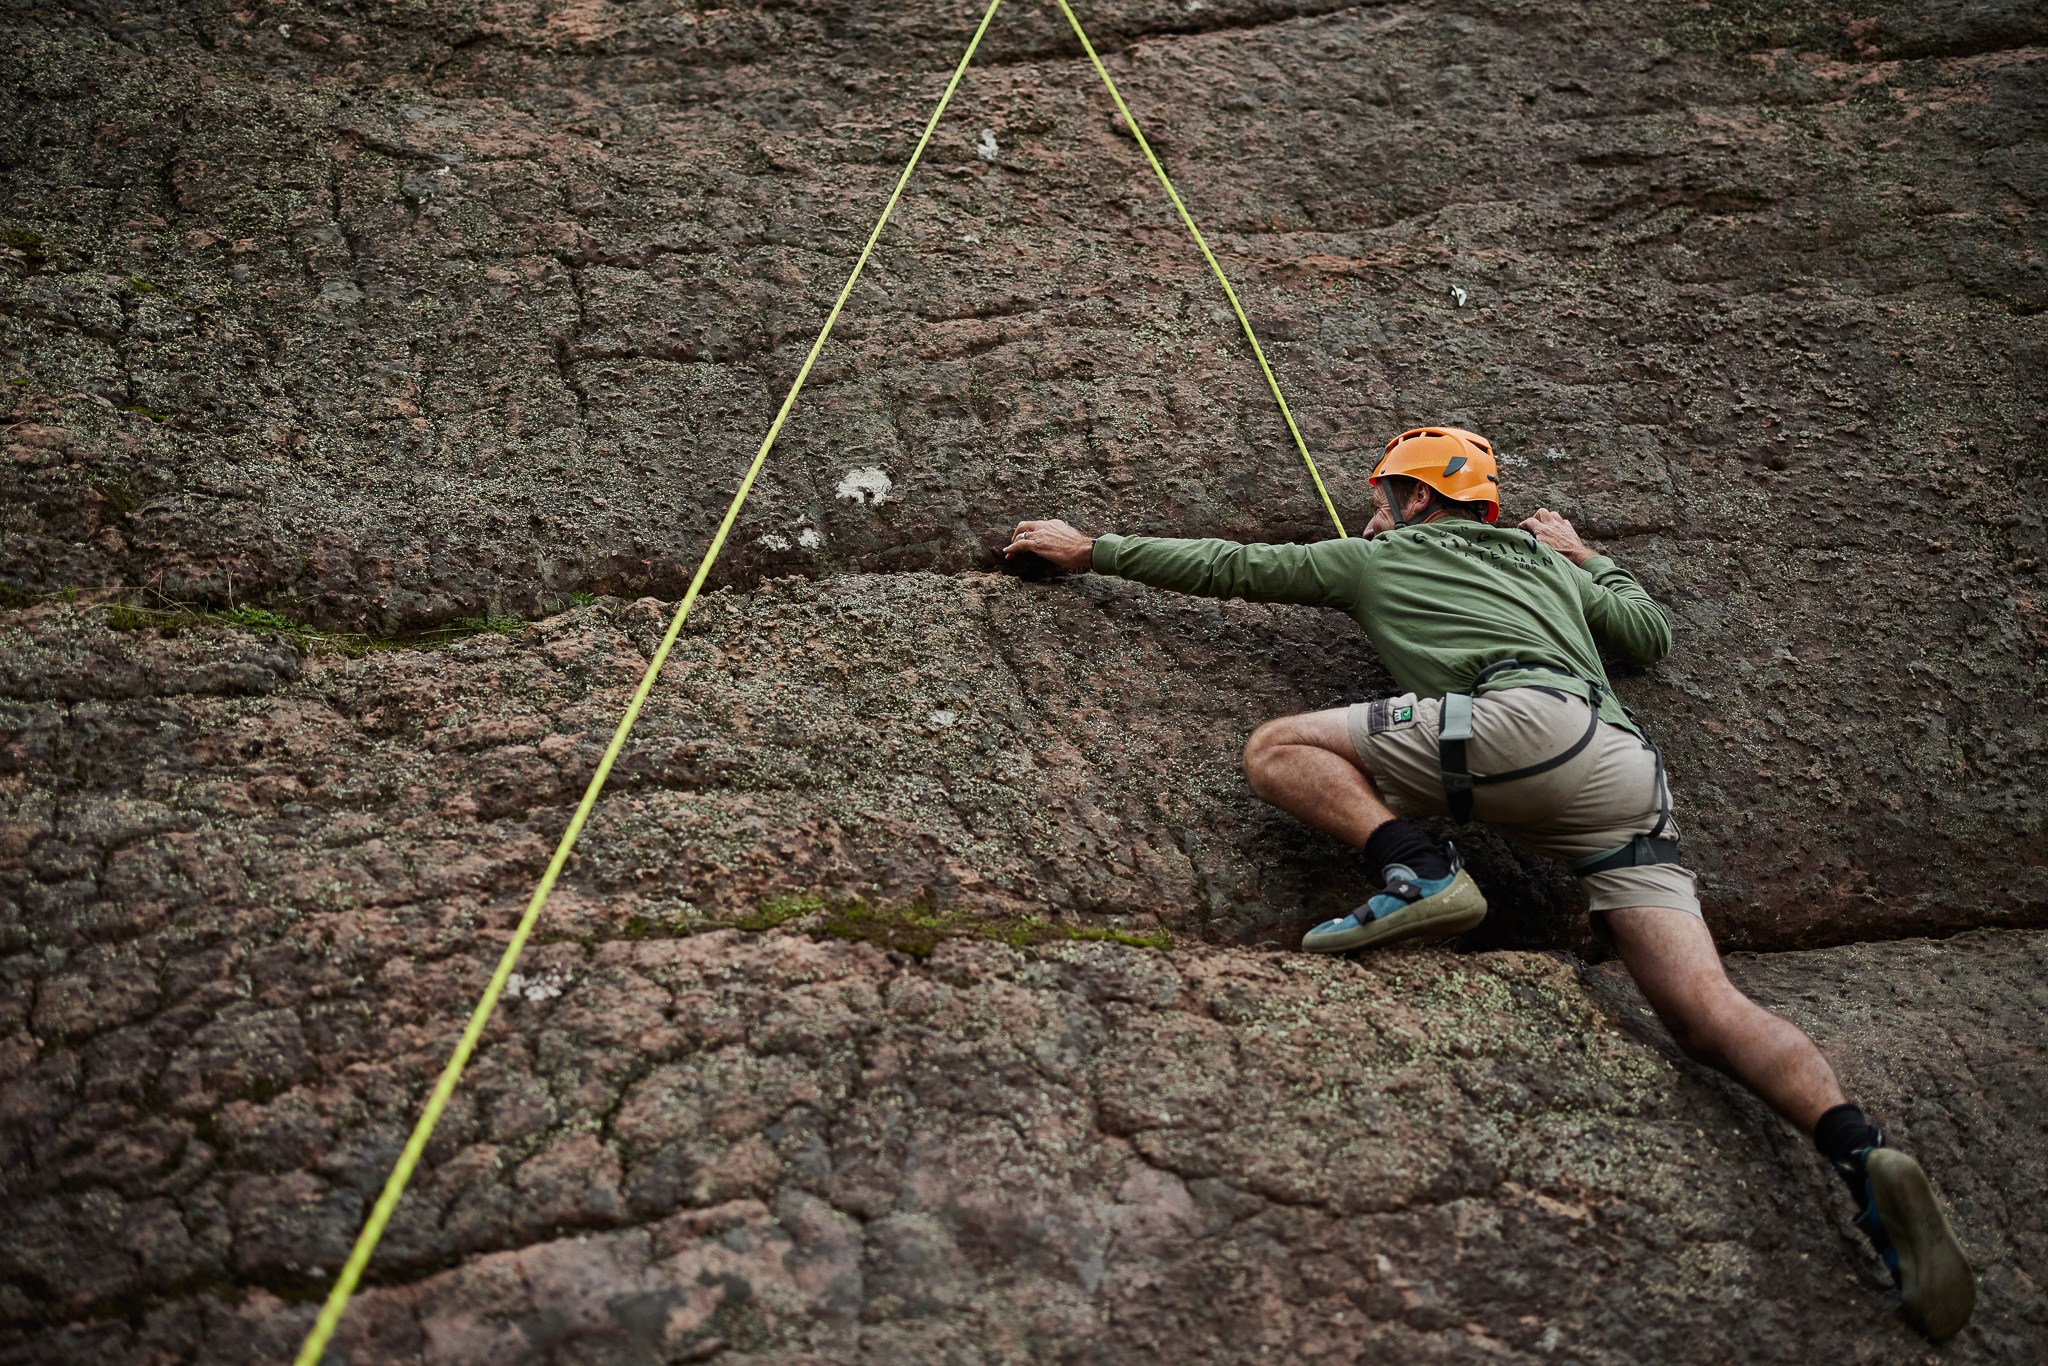 Rock Climb – Beginner to intermediate